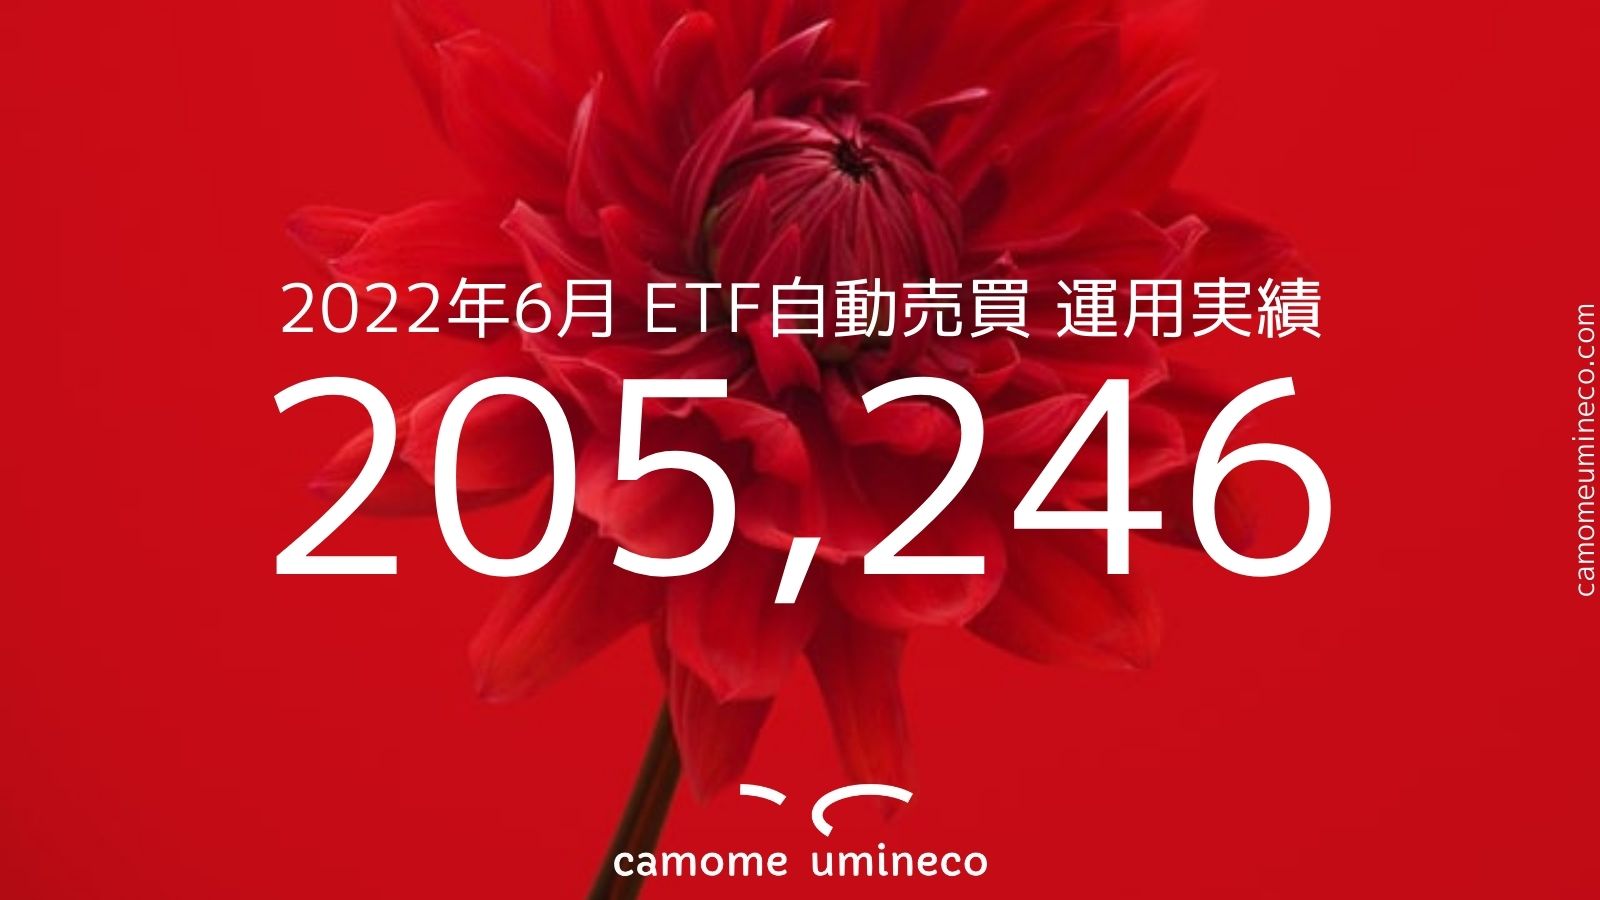 【ETF自動売買】2022年6月 運用実績 205,246円 トライオートETF ナスダックトラリピ